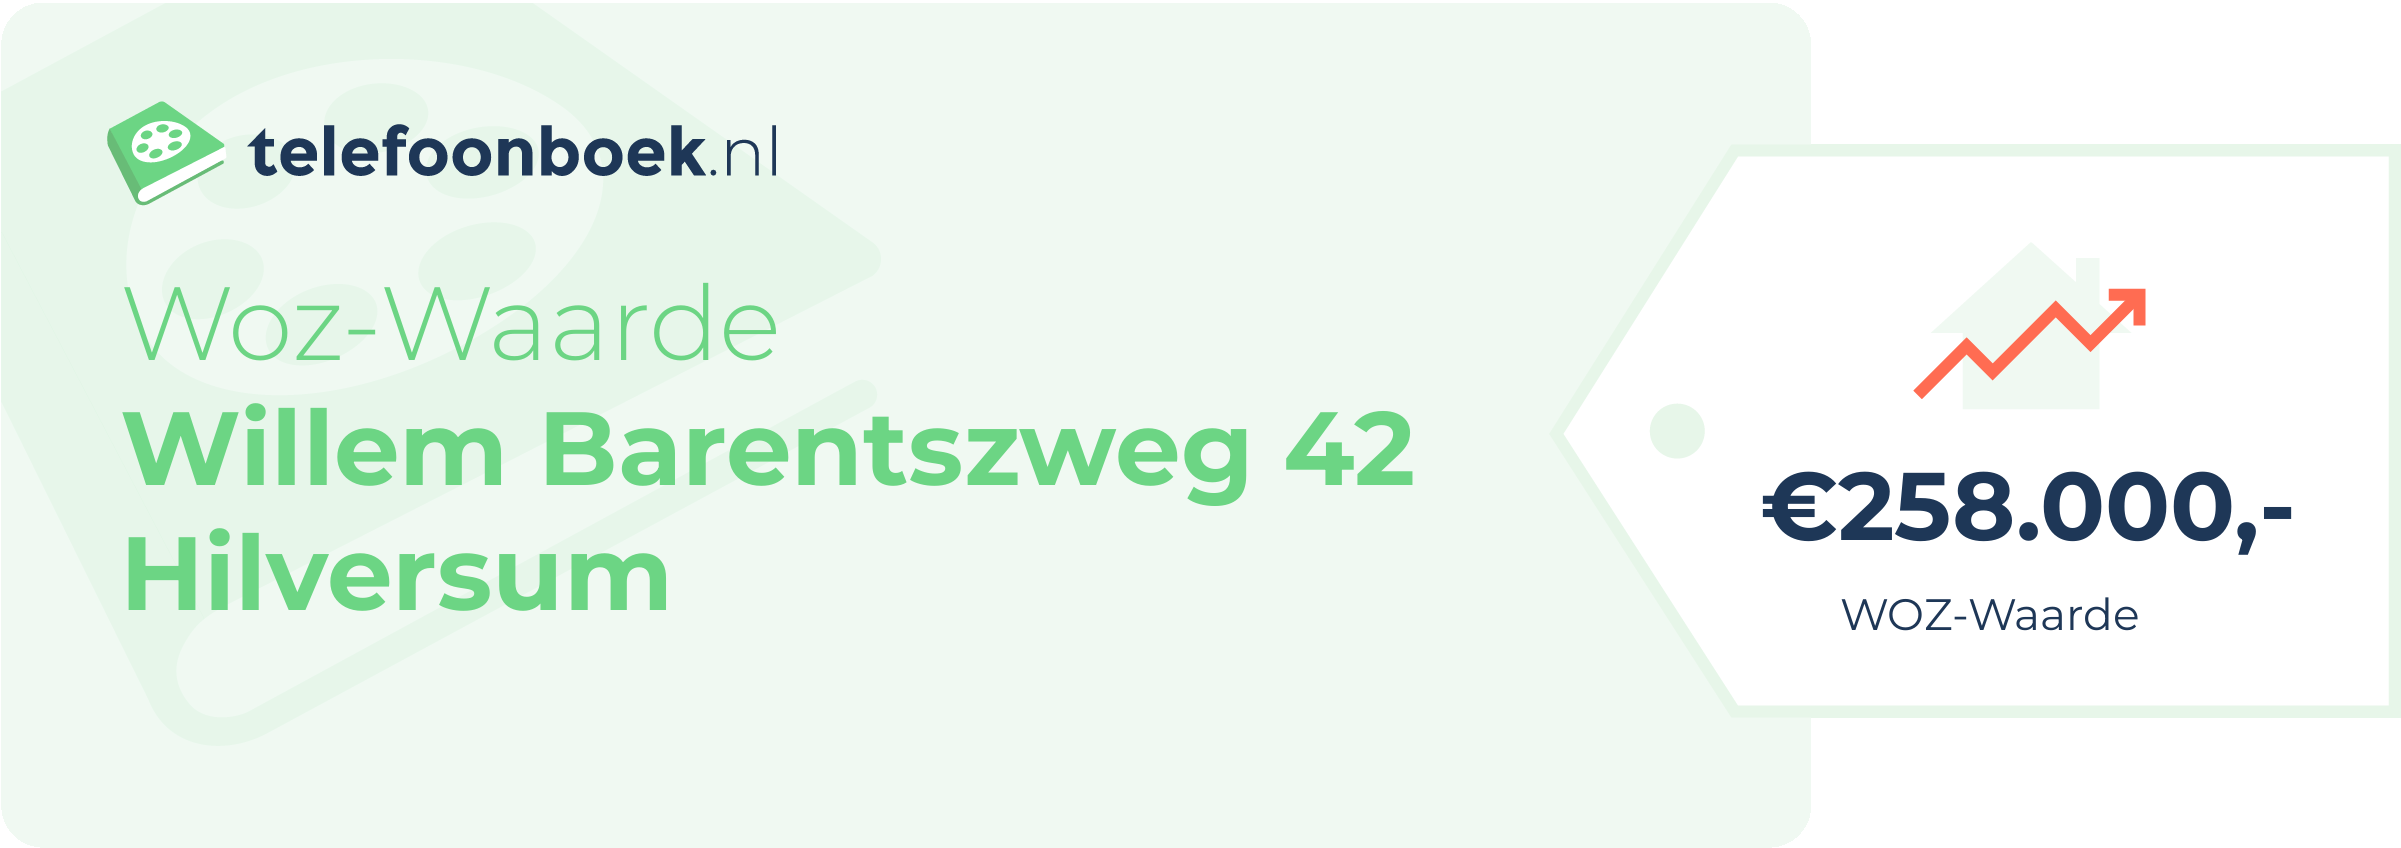 WOZ-waarde Willem Barentszweg 42 Hilversum